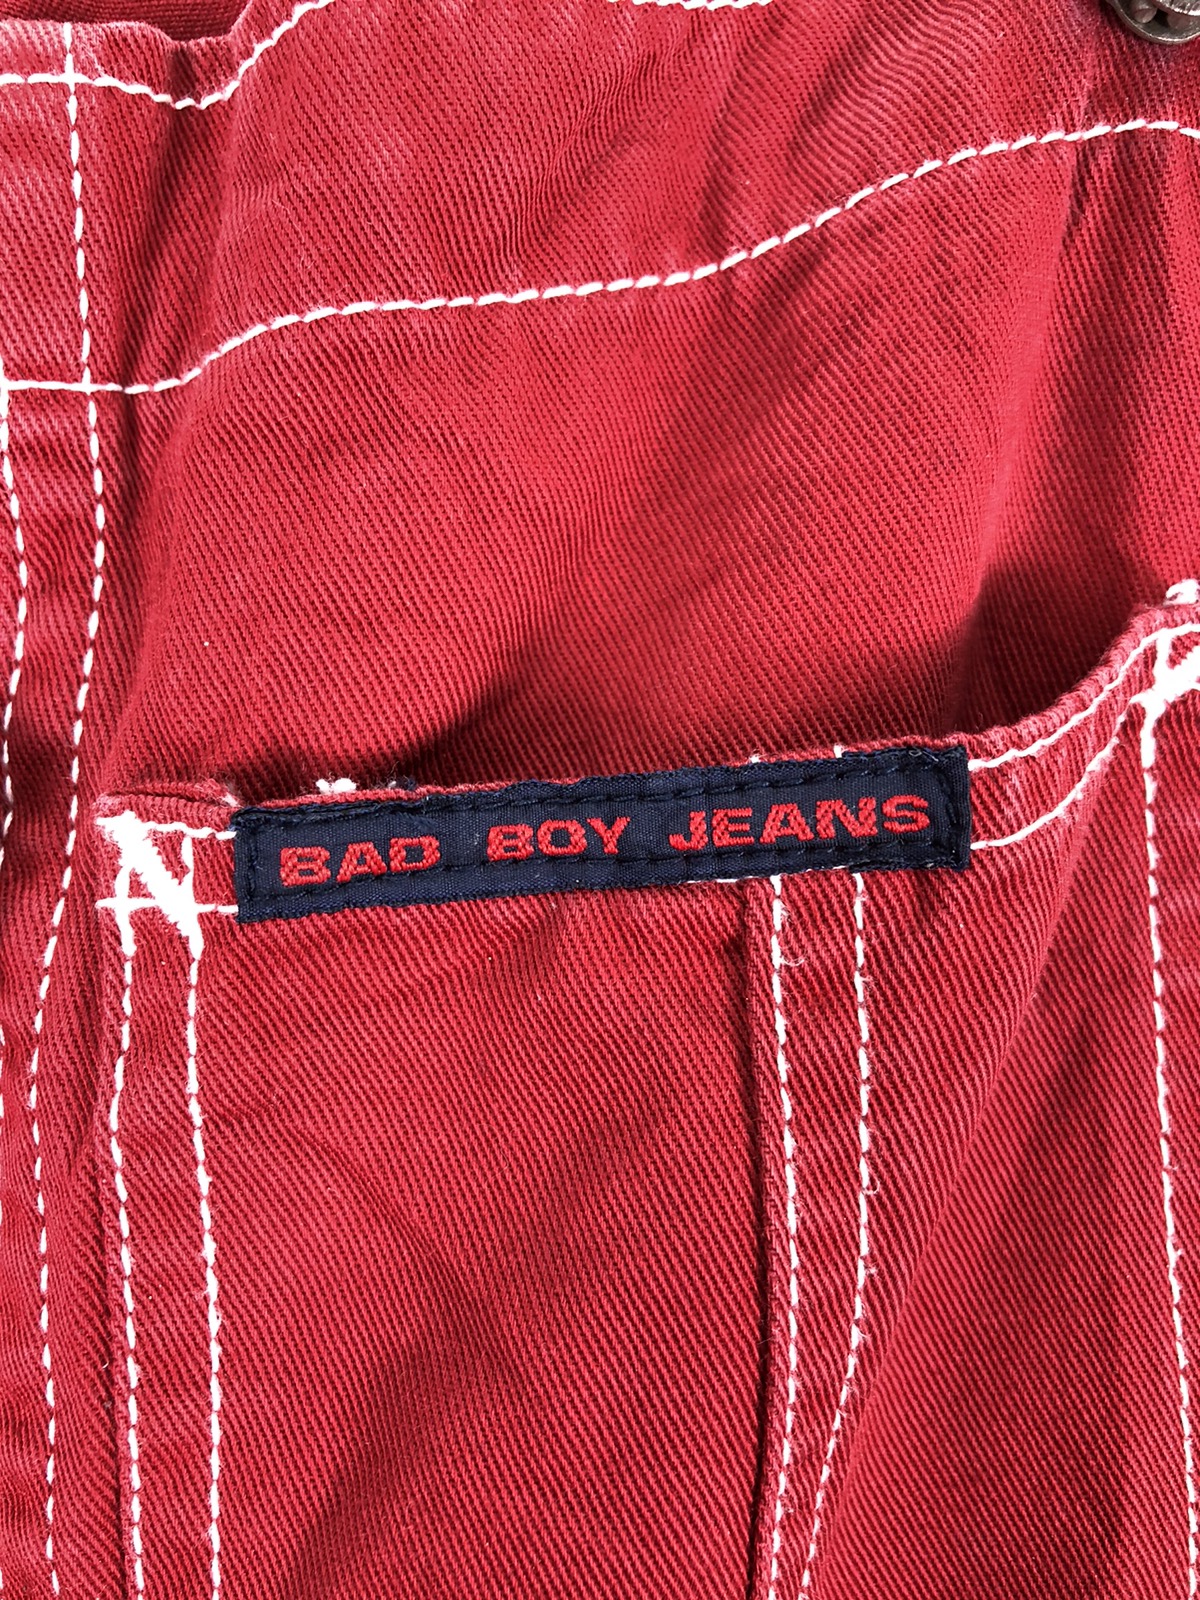 Vintage - Vintage 90's Bad Boy Jeans Red Overall Denim Workwear Style - 16